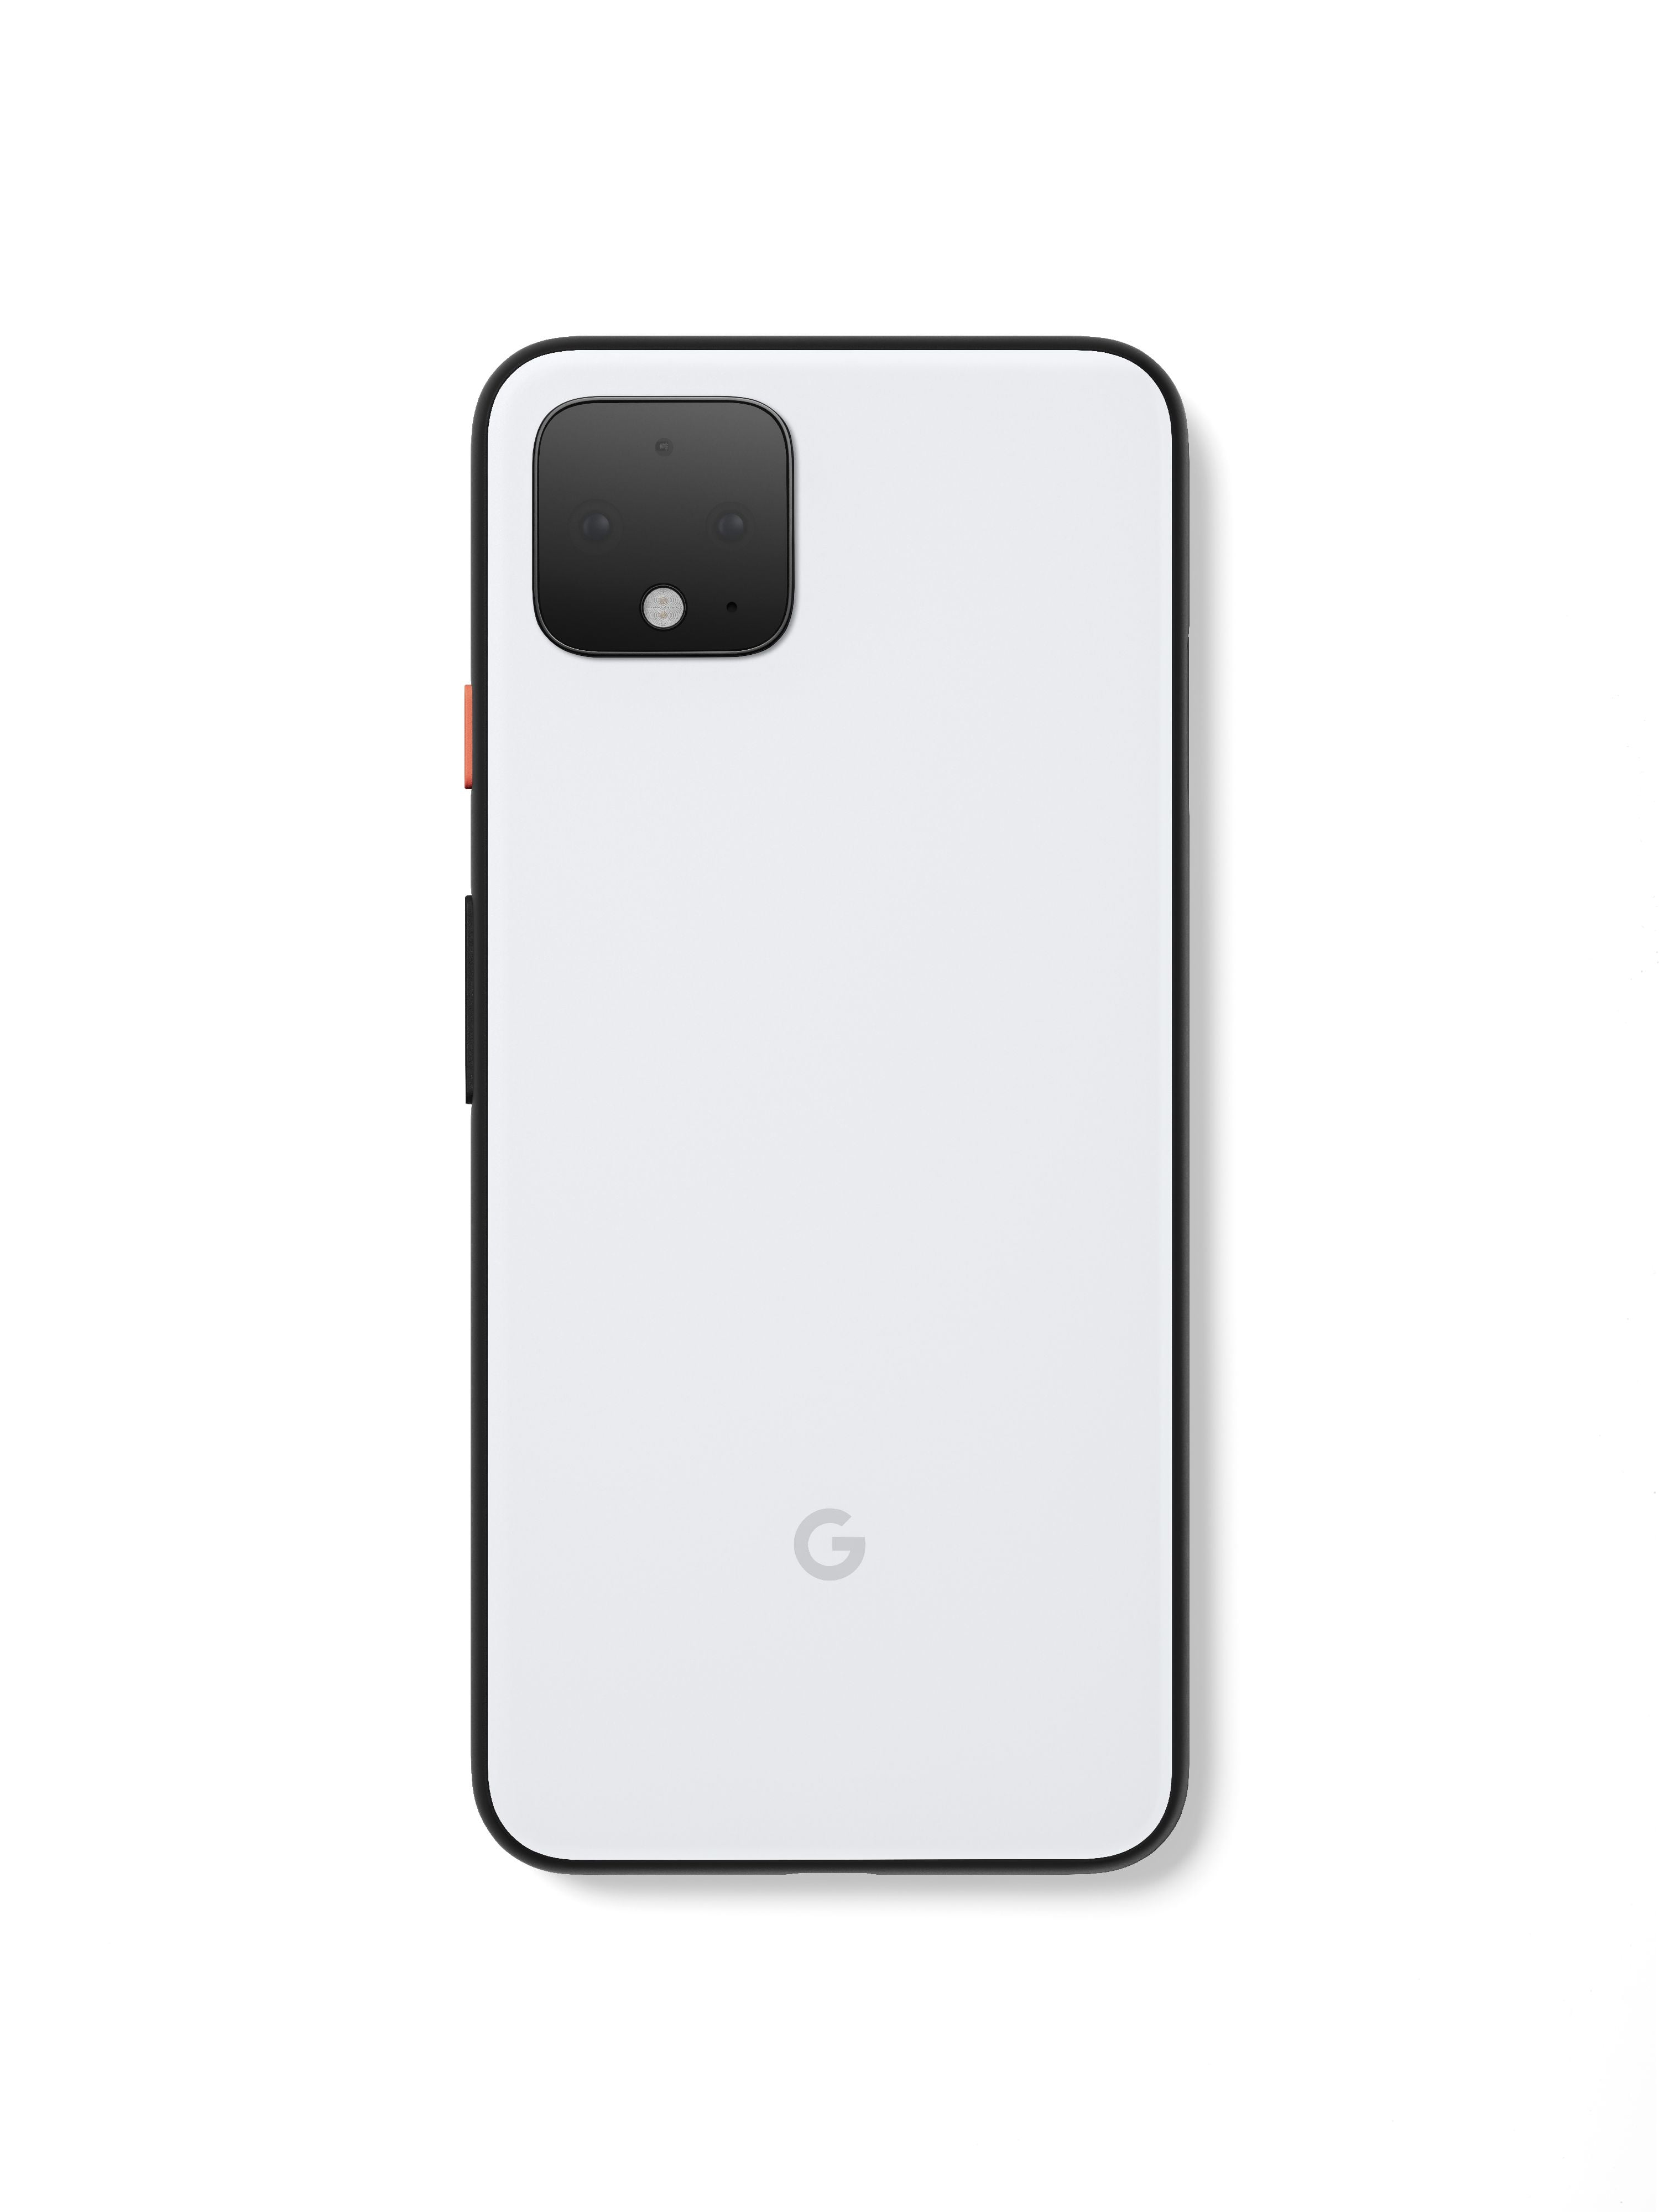 Google Pixel 4 White 128 GB, Unlocked